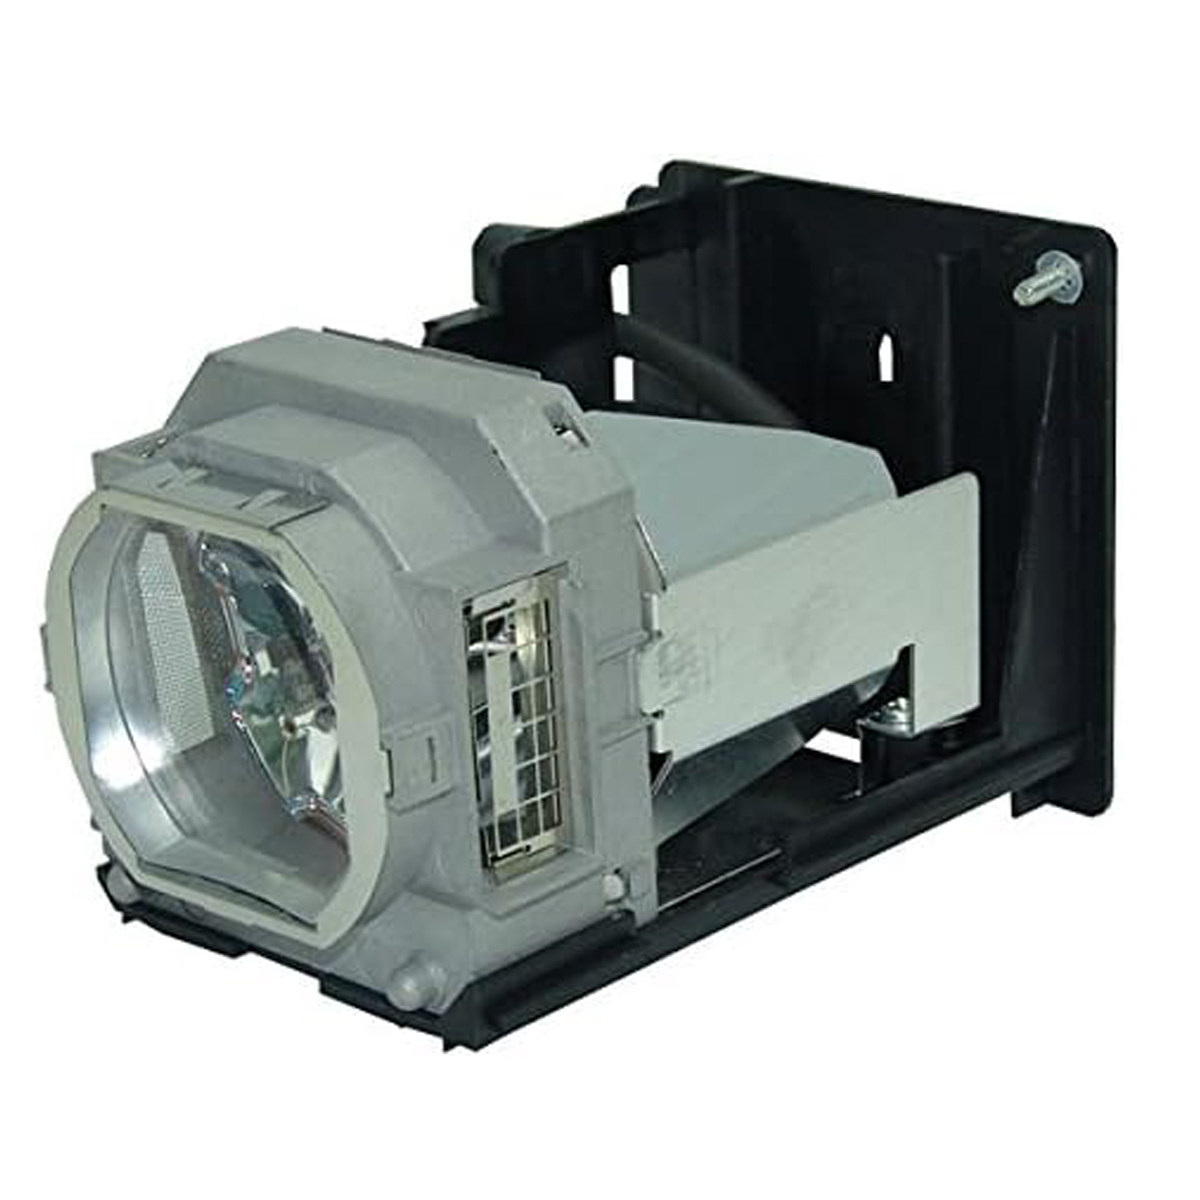 Replacement Projector lamp VLT-XL550LP For MITSUBISHI XL1550 XL550 XL 550U